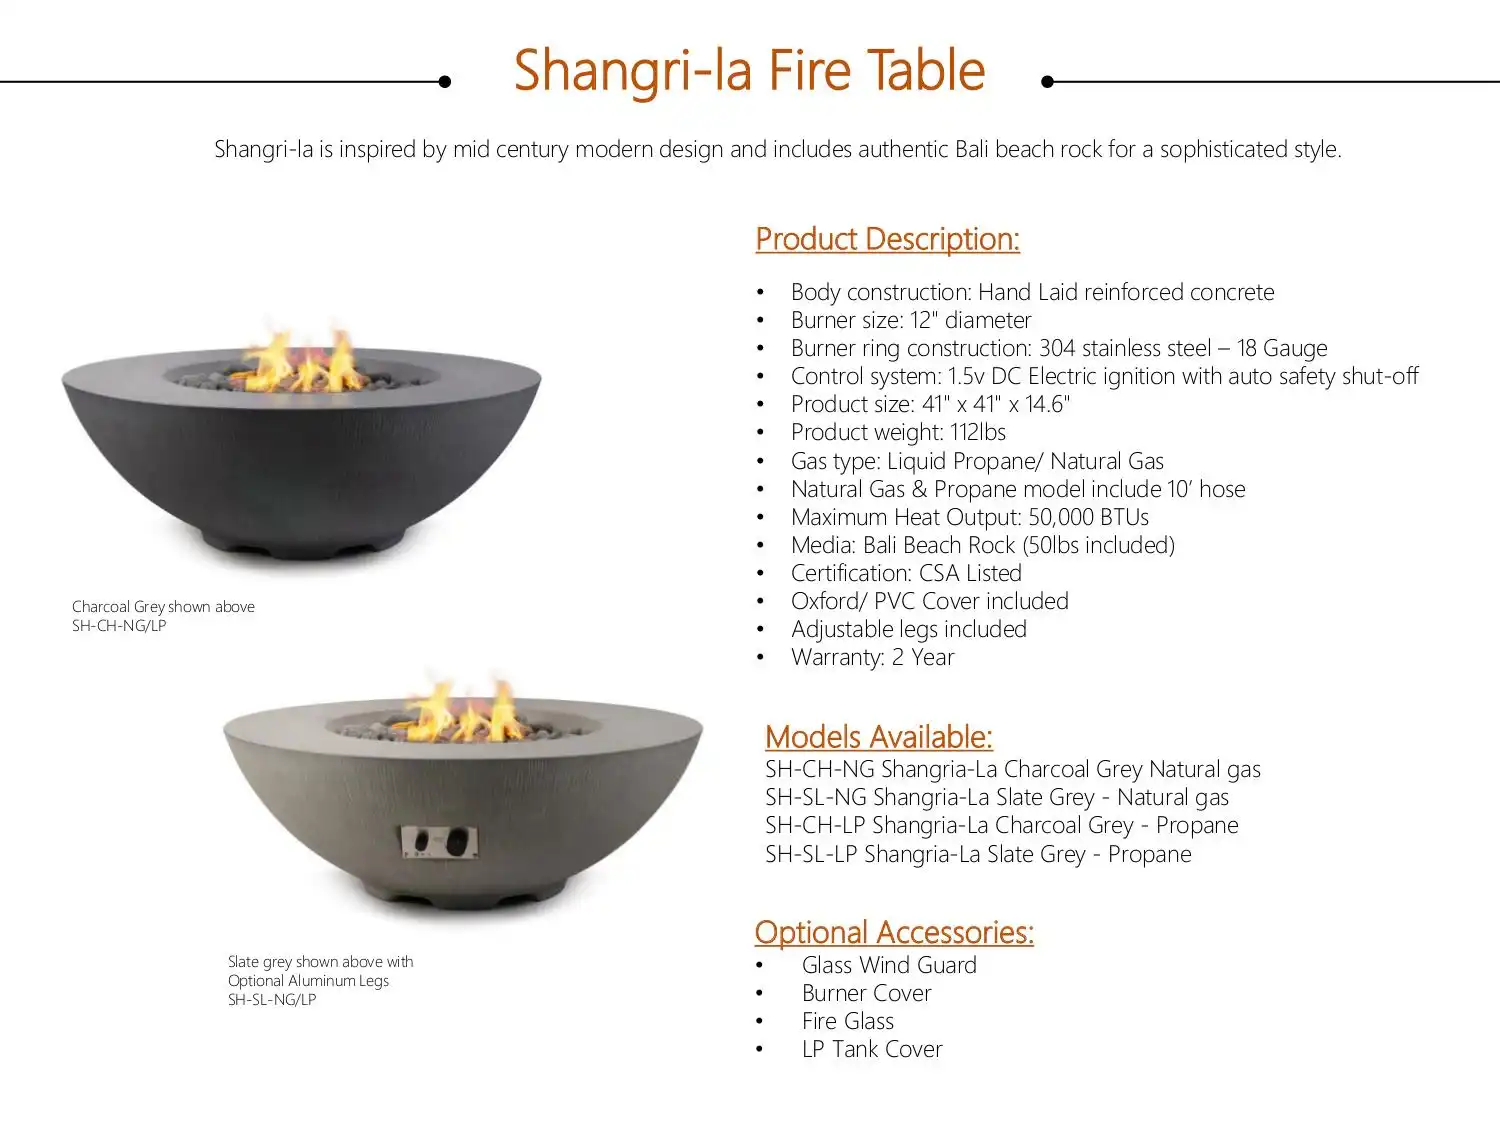 CL SHANGRI-LA FIRE TABLE C$ 2,200 by Pyromania